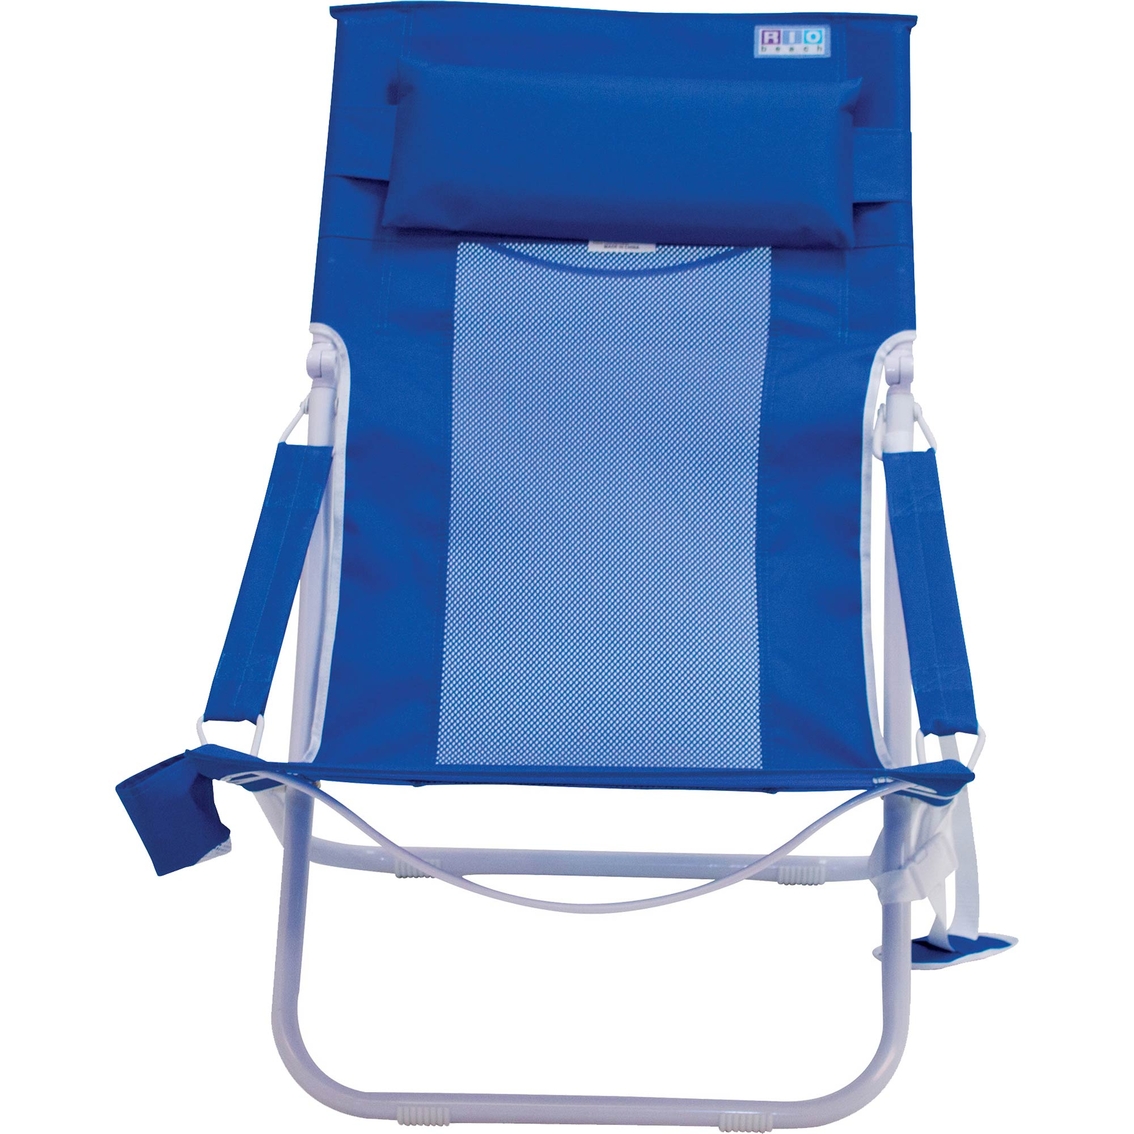 ShelterLogic Breeze Hammock Chair - Image 2 of 6